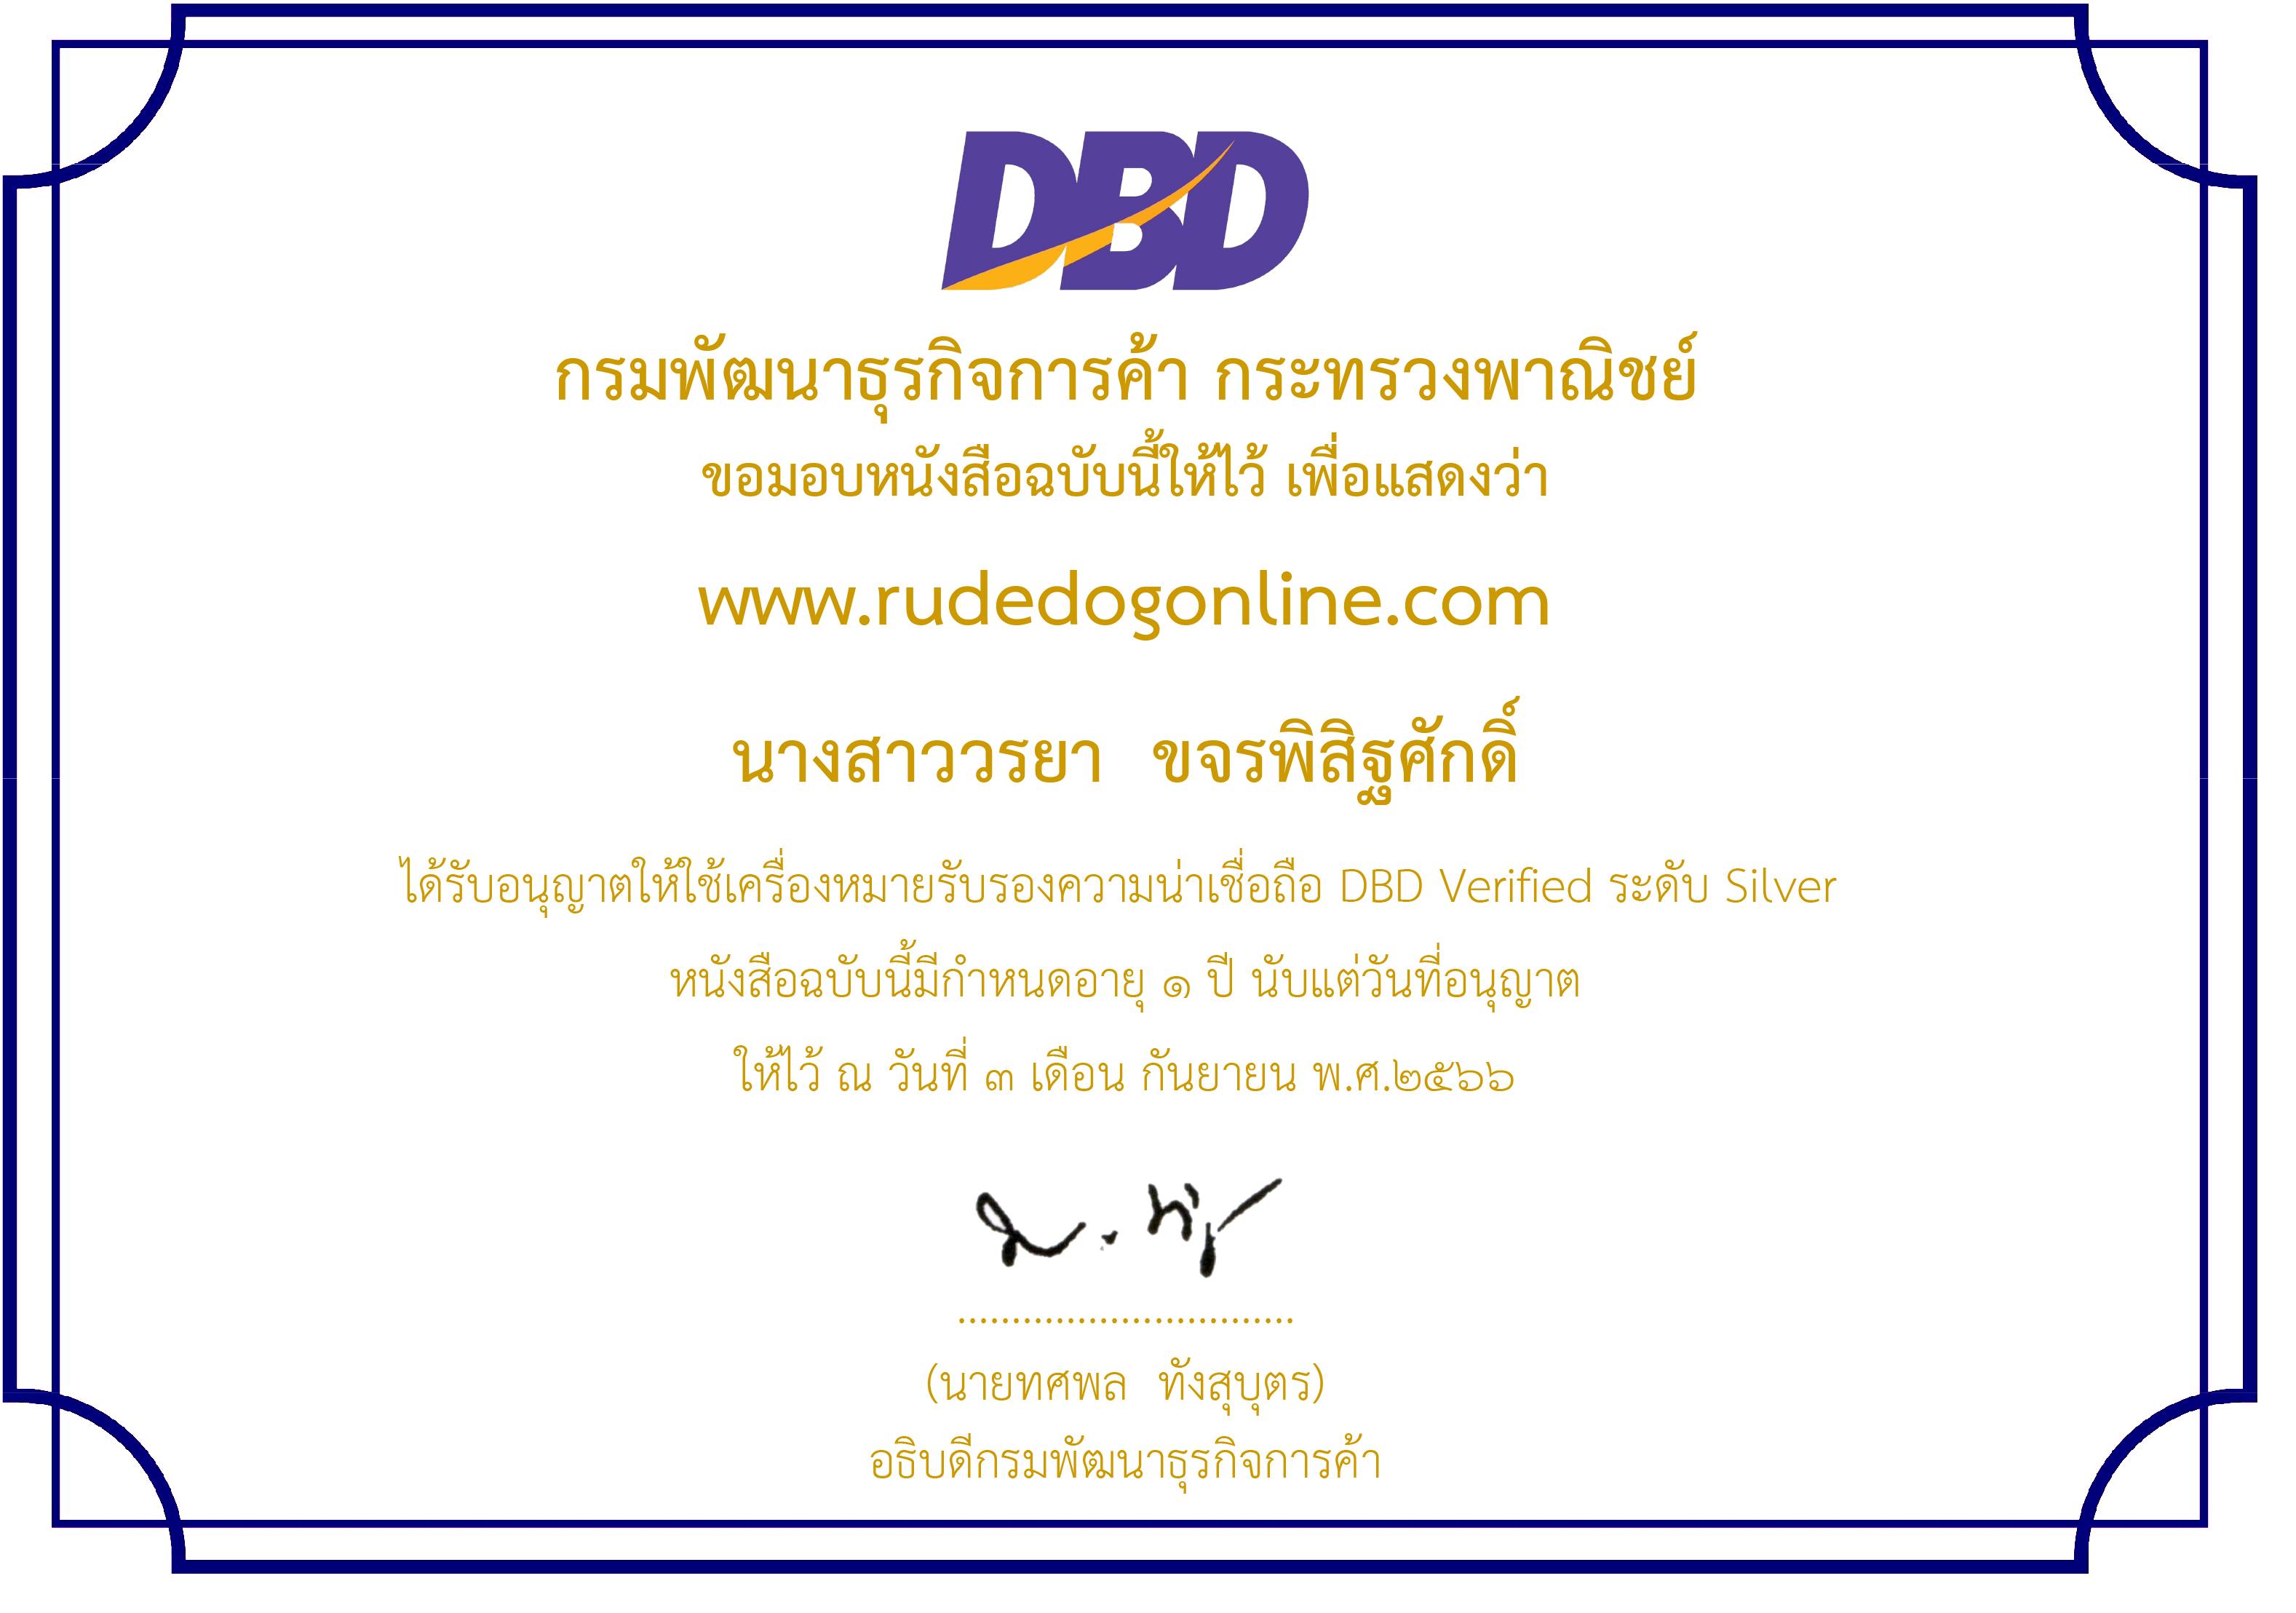 DBD Verified Silver Certificate